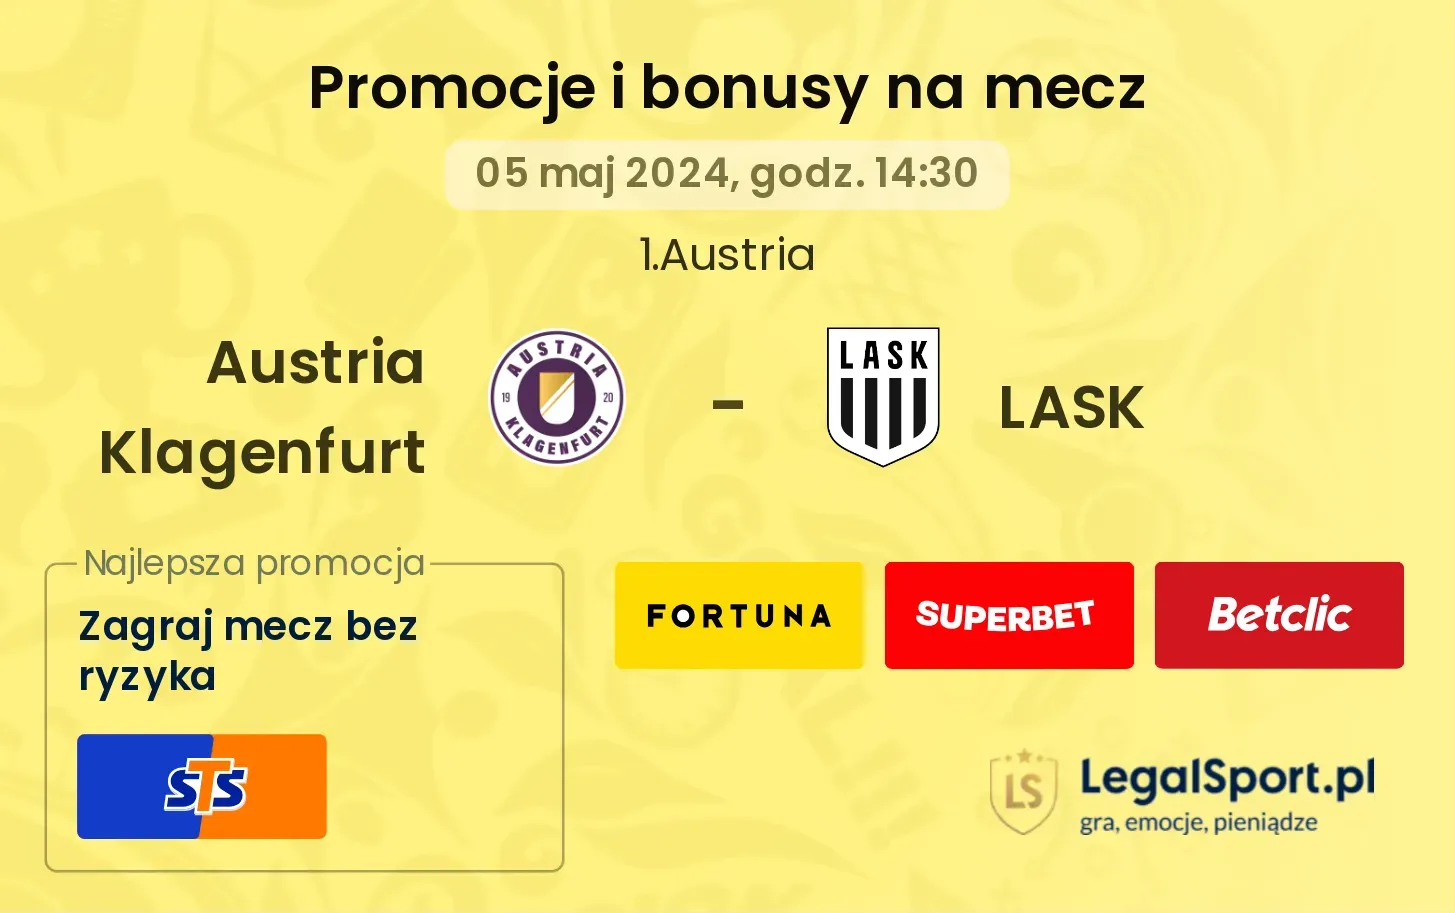 Austria Klagenfurt - LASK promocje bonusy na mecz